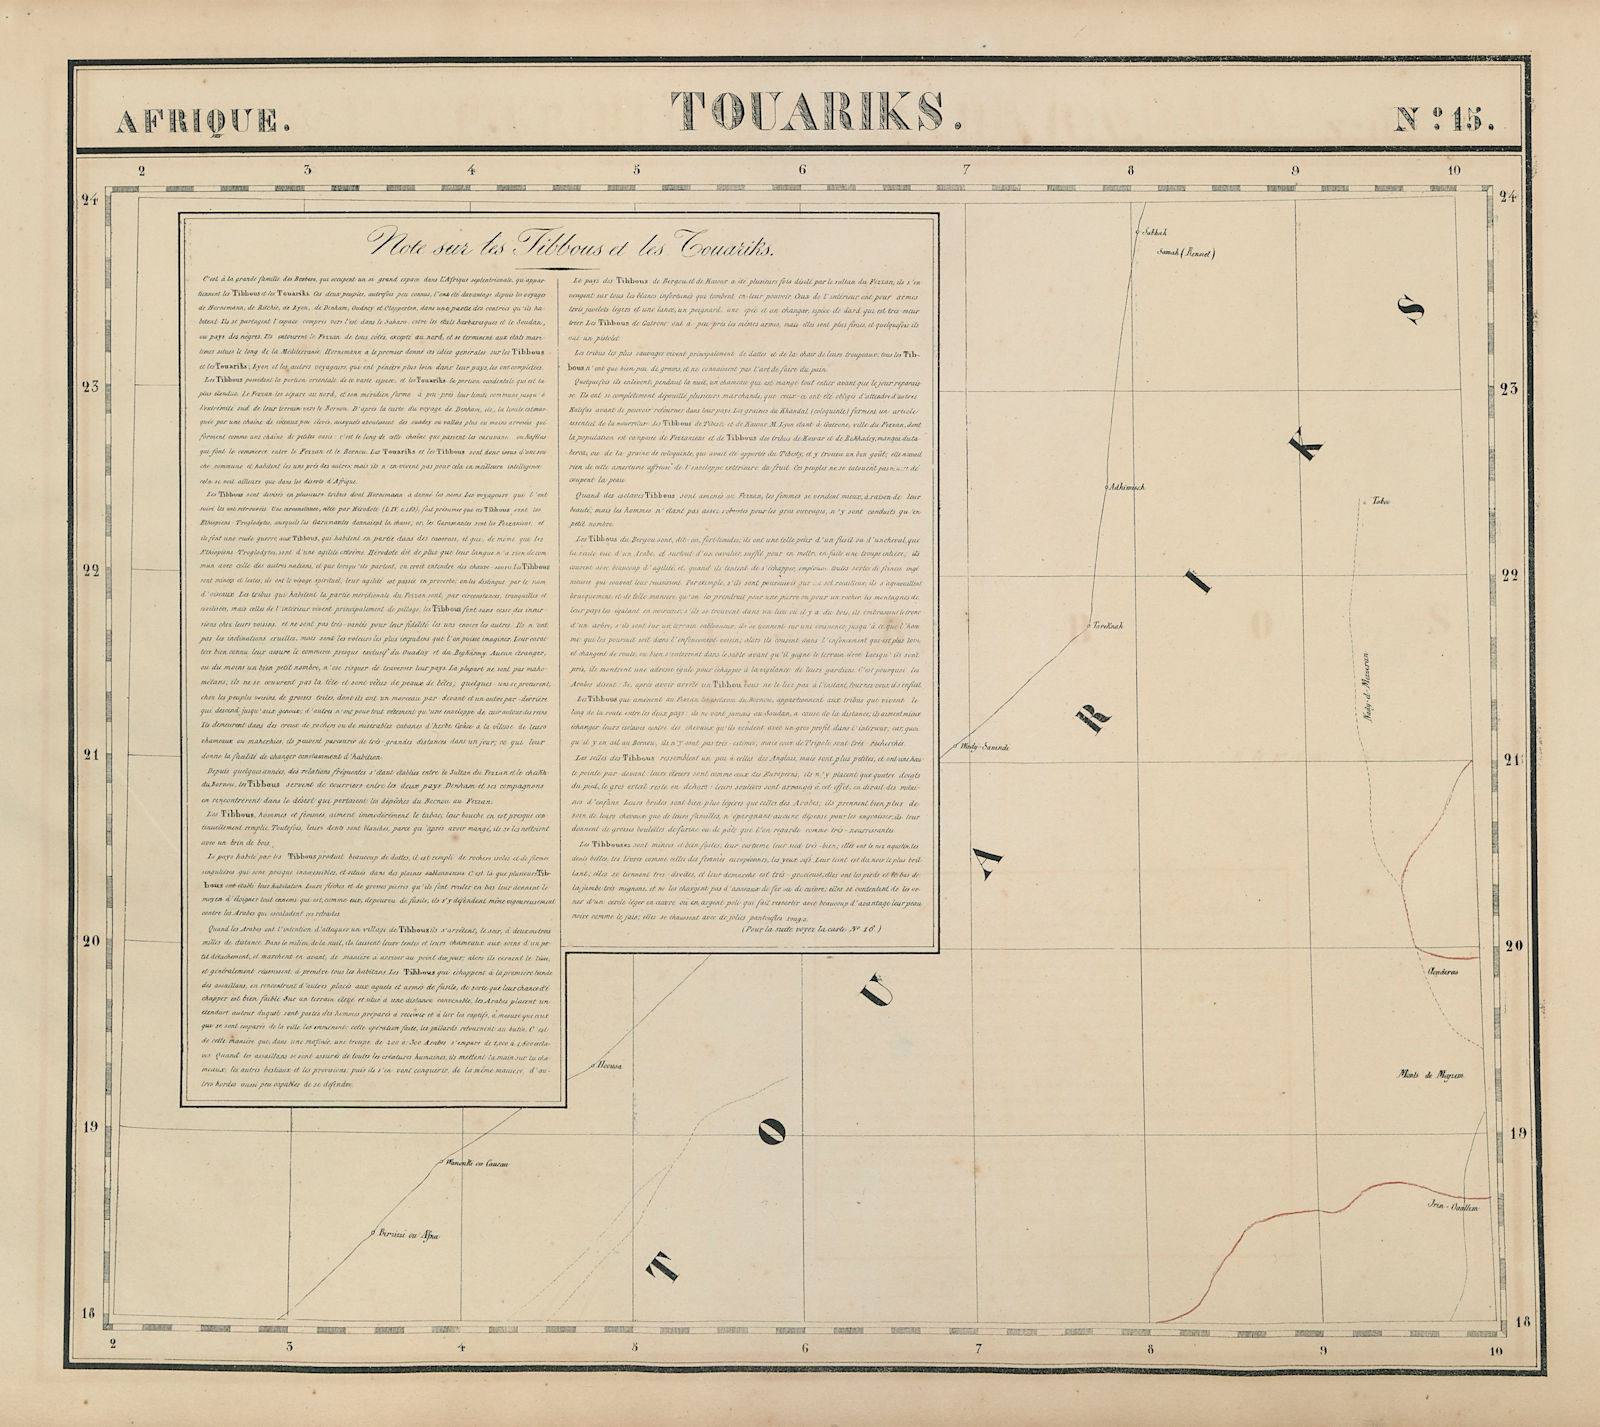 Associate Product Afrique. Touariks #15. Sahara in SE Niger & Northern Niger VANDERMAELEN 1827 map